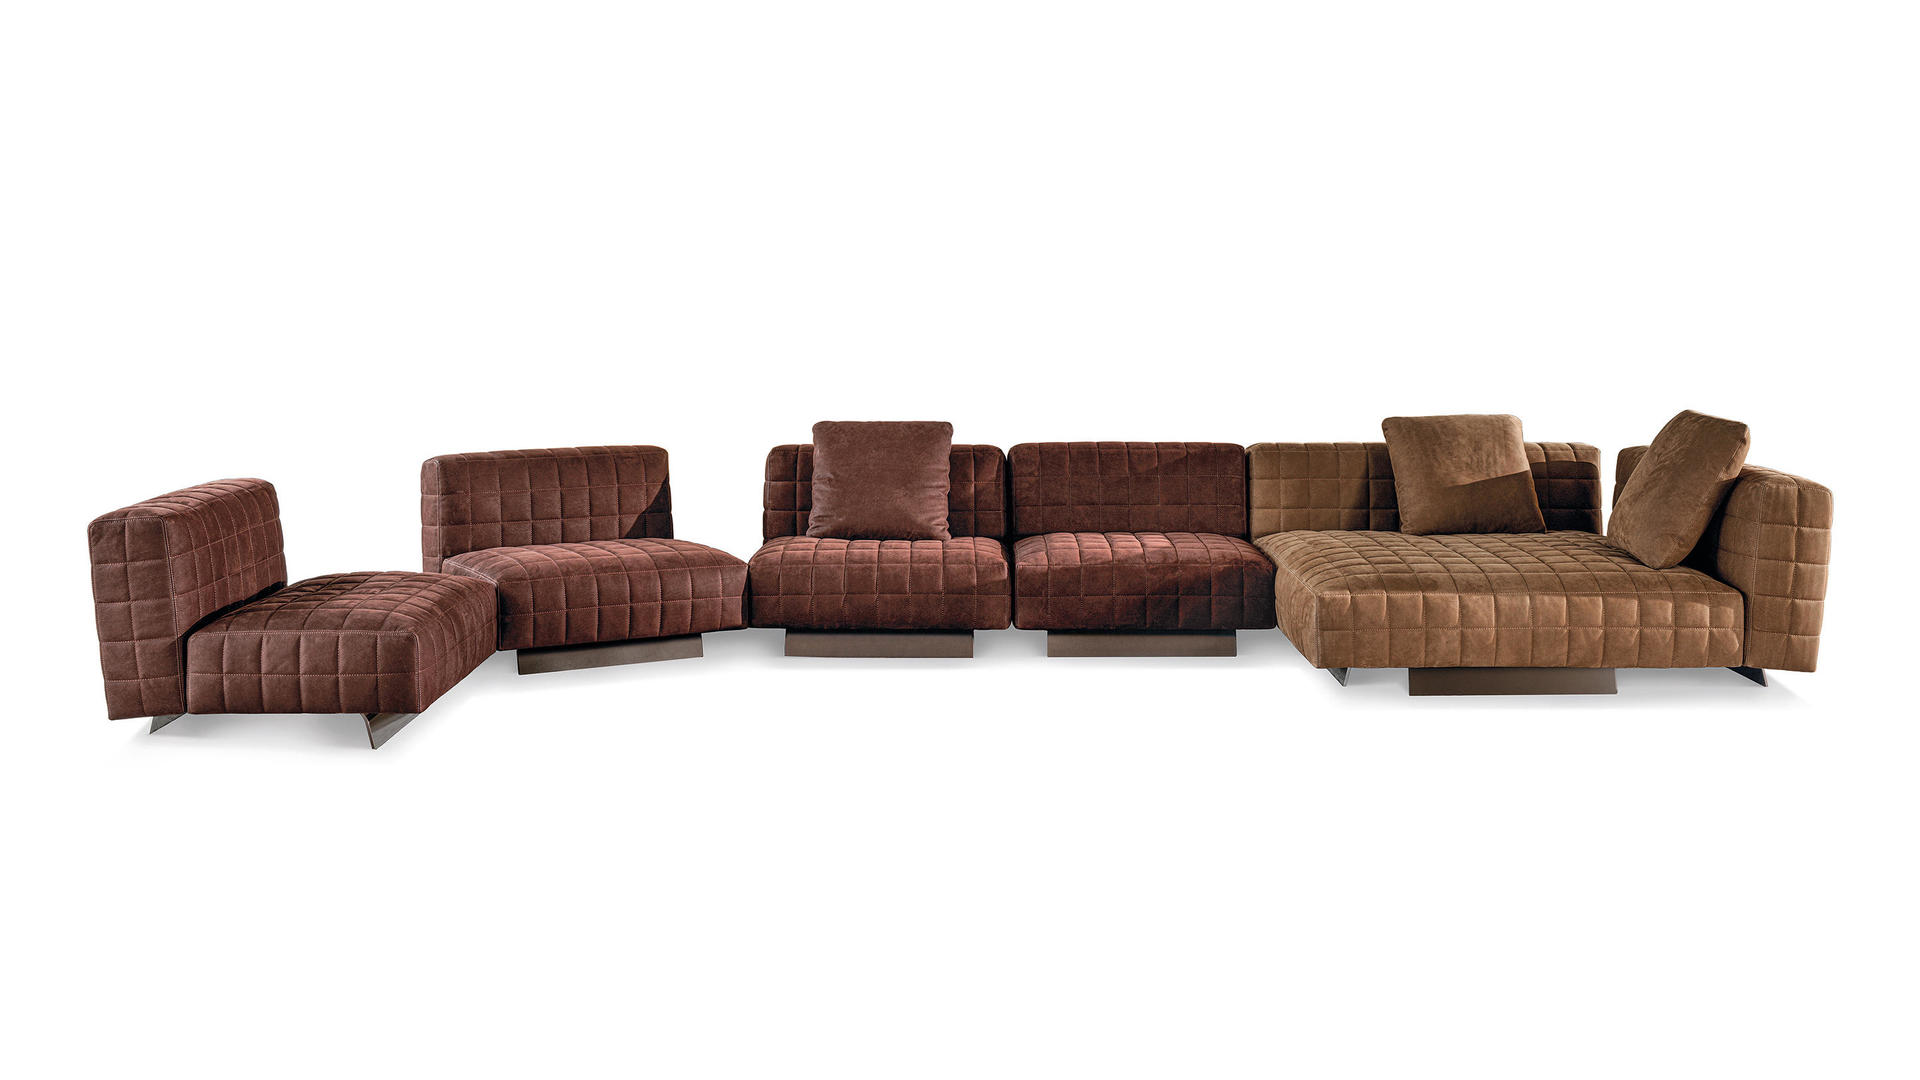 HORA Barneveld Minotti Twiggy bank modulaire sofa design meubelen designmeubelen 14.jpg